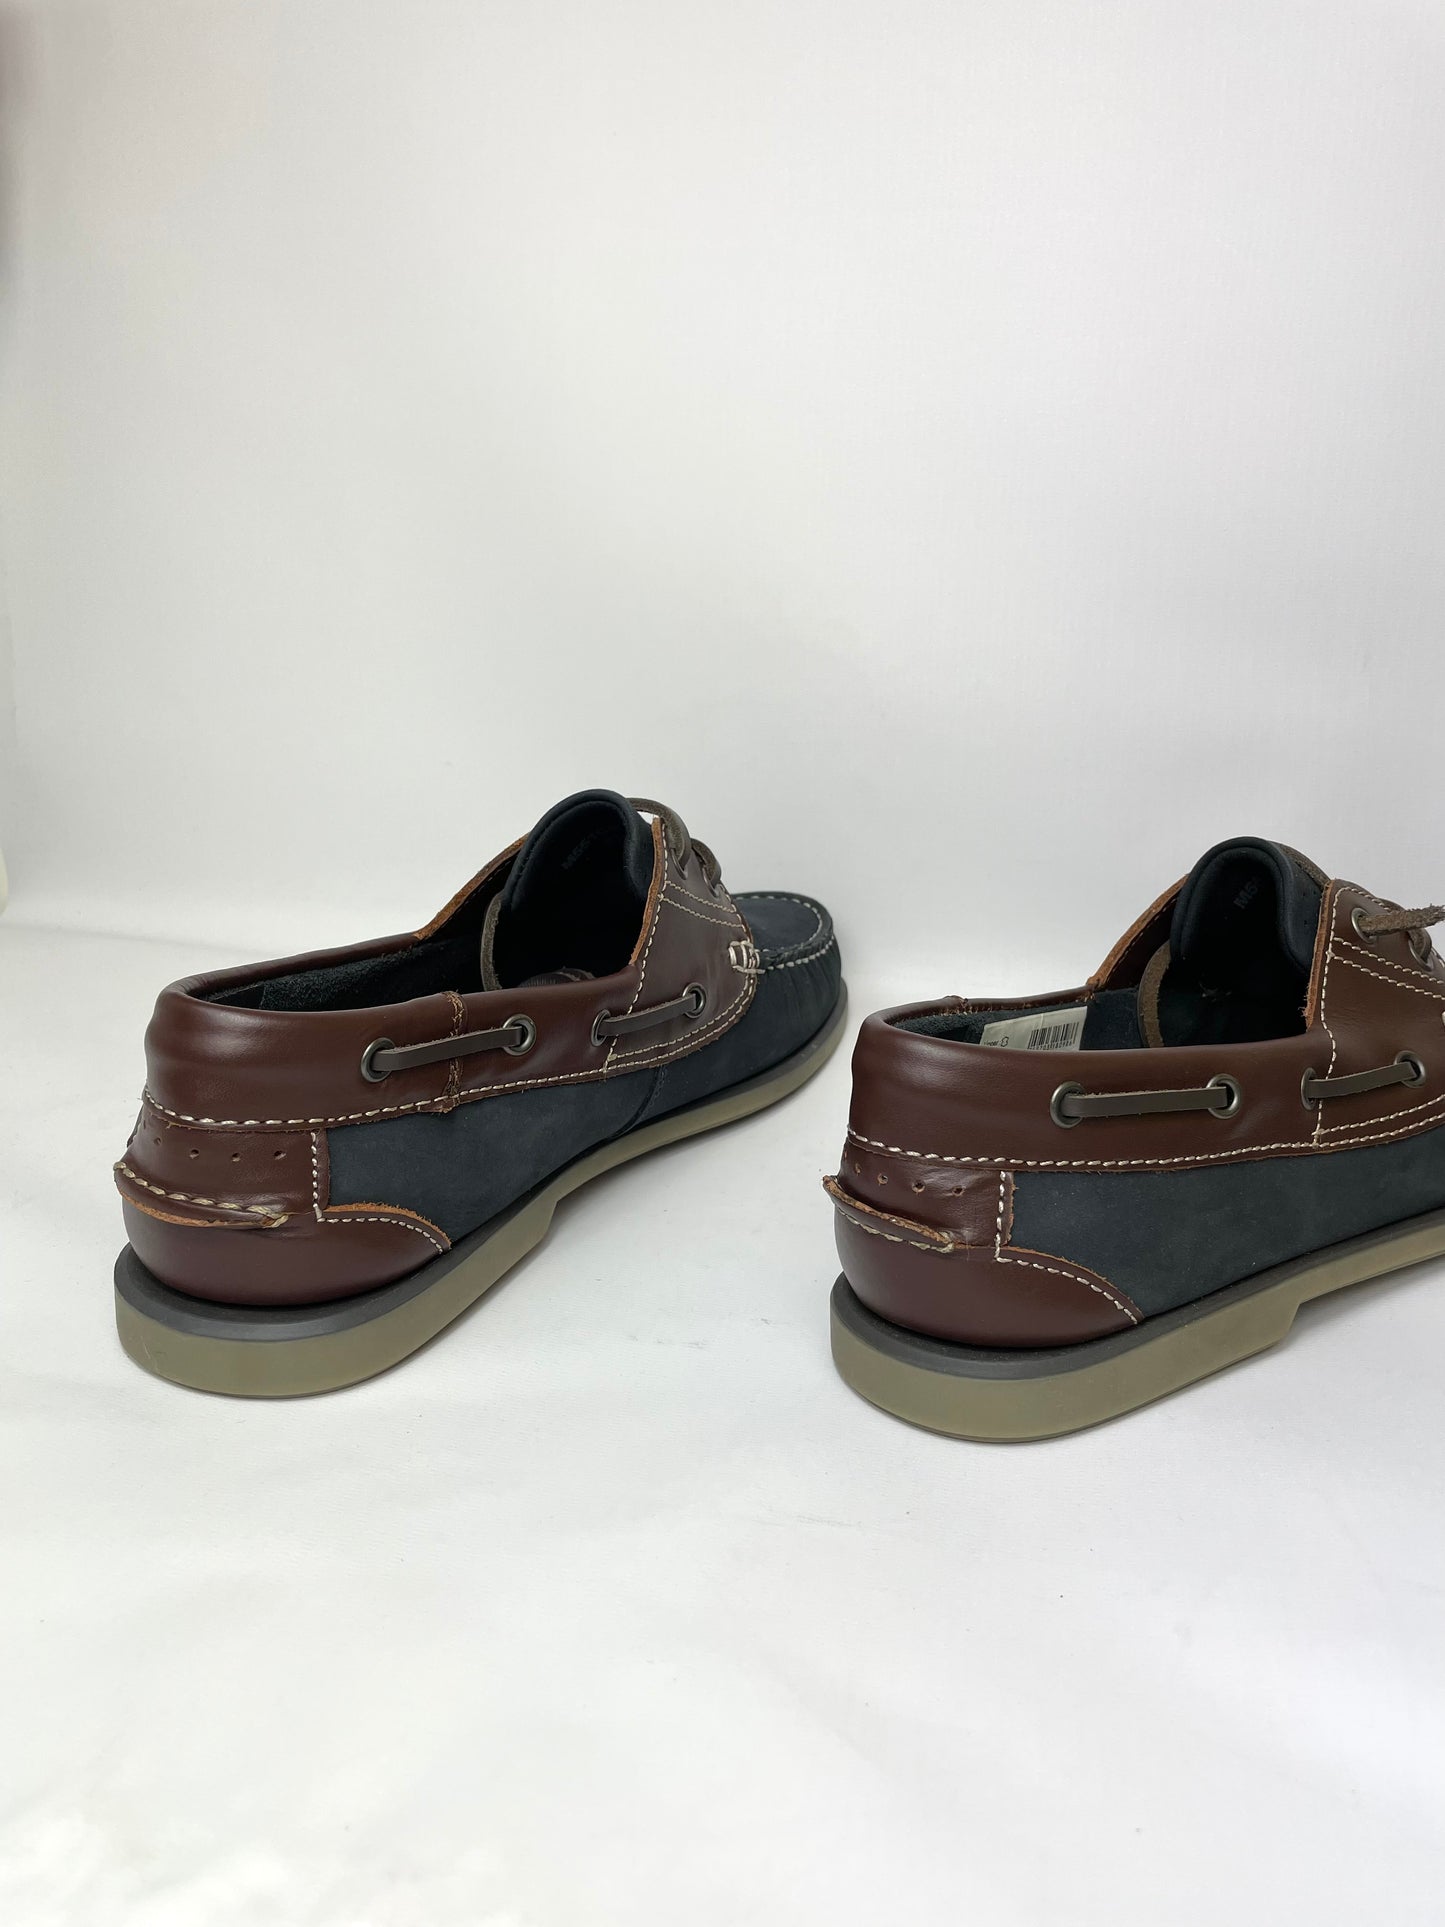 Dek Leather Moccasin Mens Boat Shoes Navy Brown